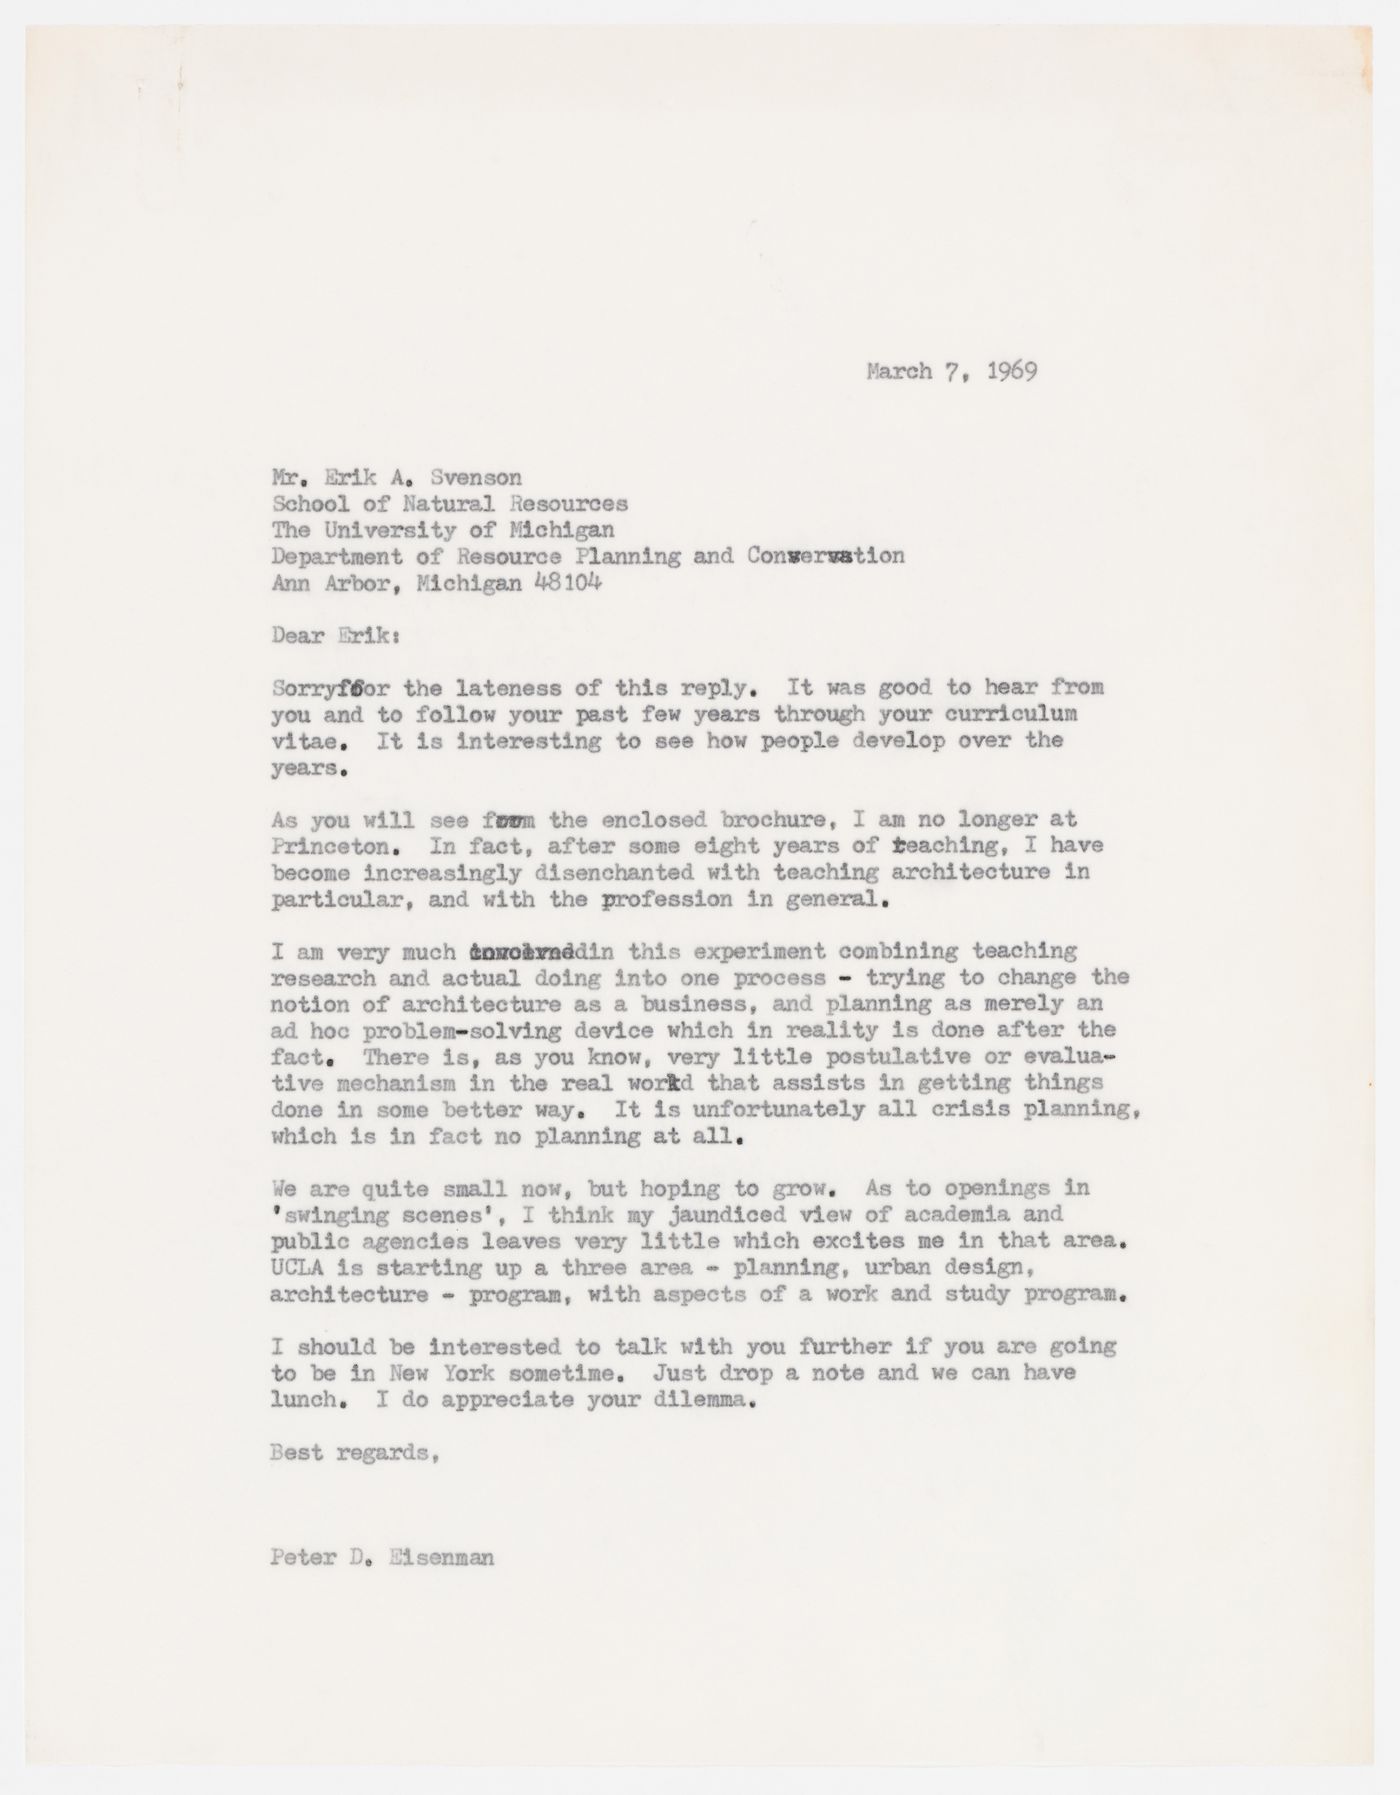 Letter from Peter Einsenman to Erik A. Svenson